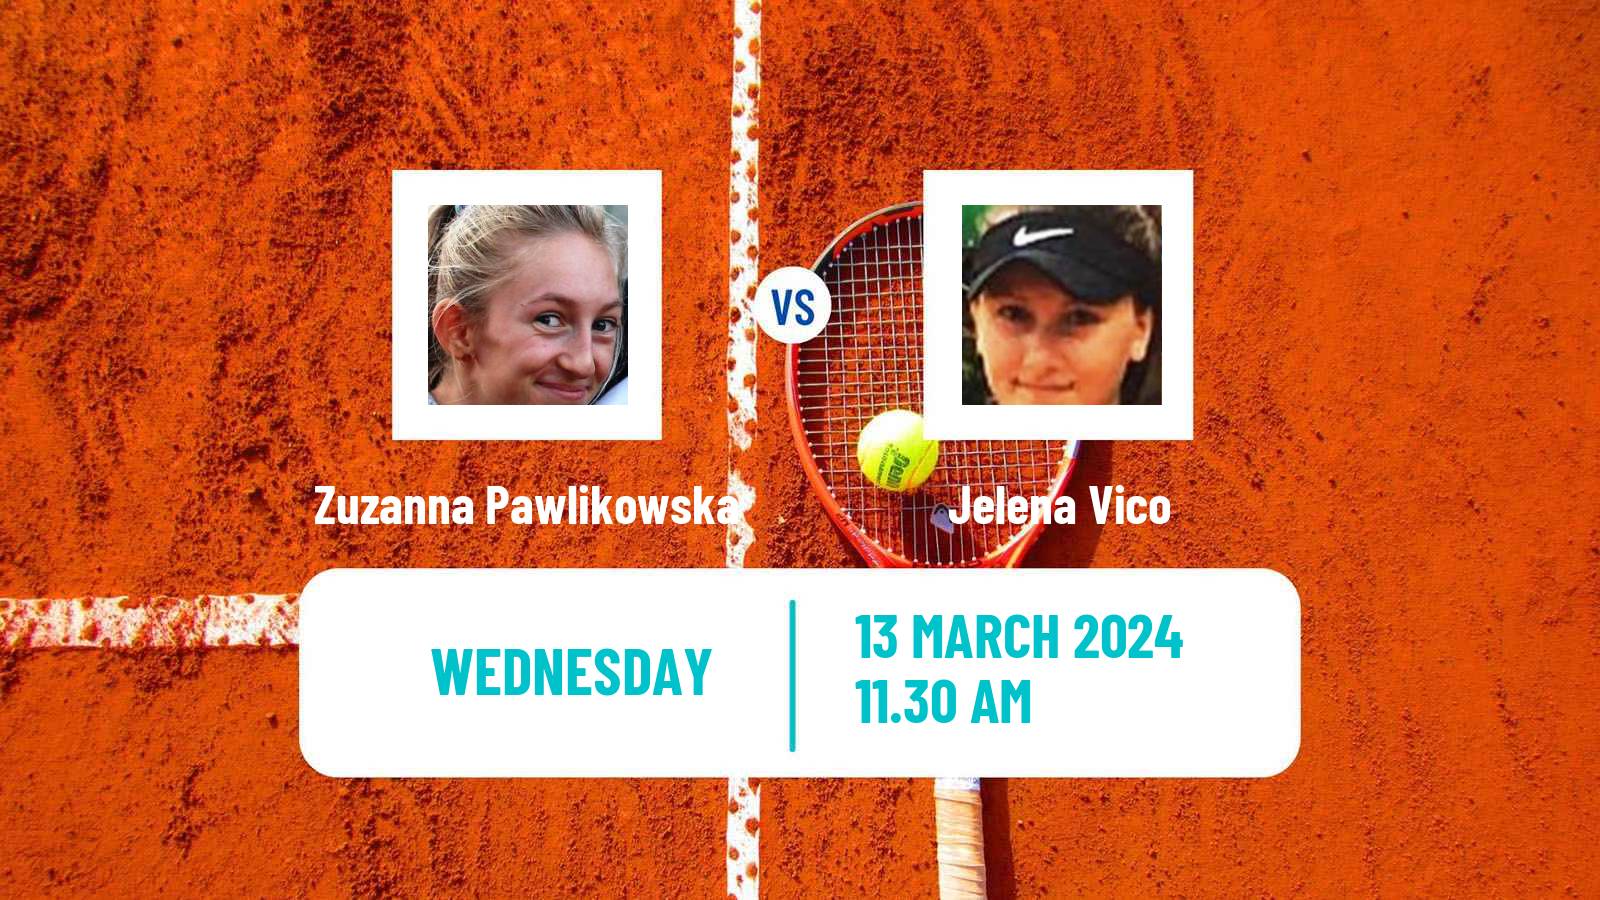 Tennis ITF W15 Montreal Women Zuzanna Pawlikowska - Jelena Vico